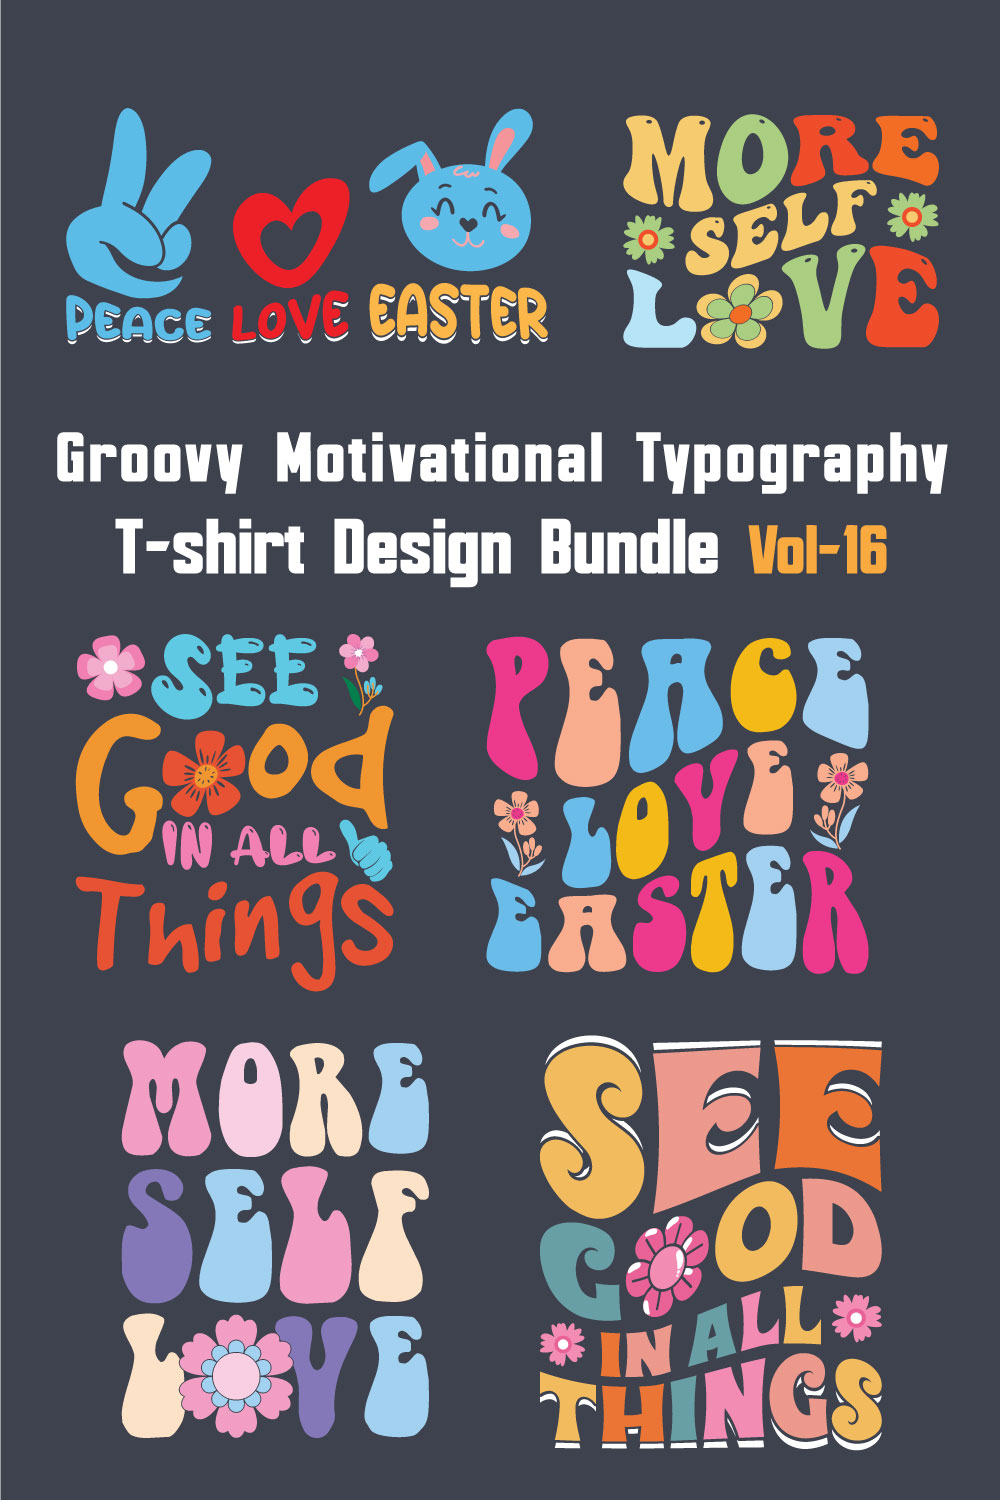 Groovy Motivational Typography T-shirt Design Bundle Vol-16 pinterest preview image.